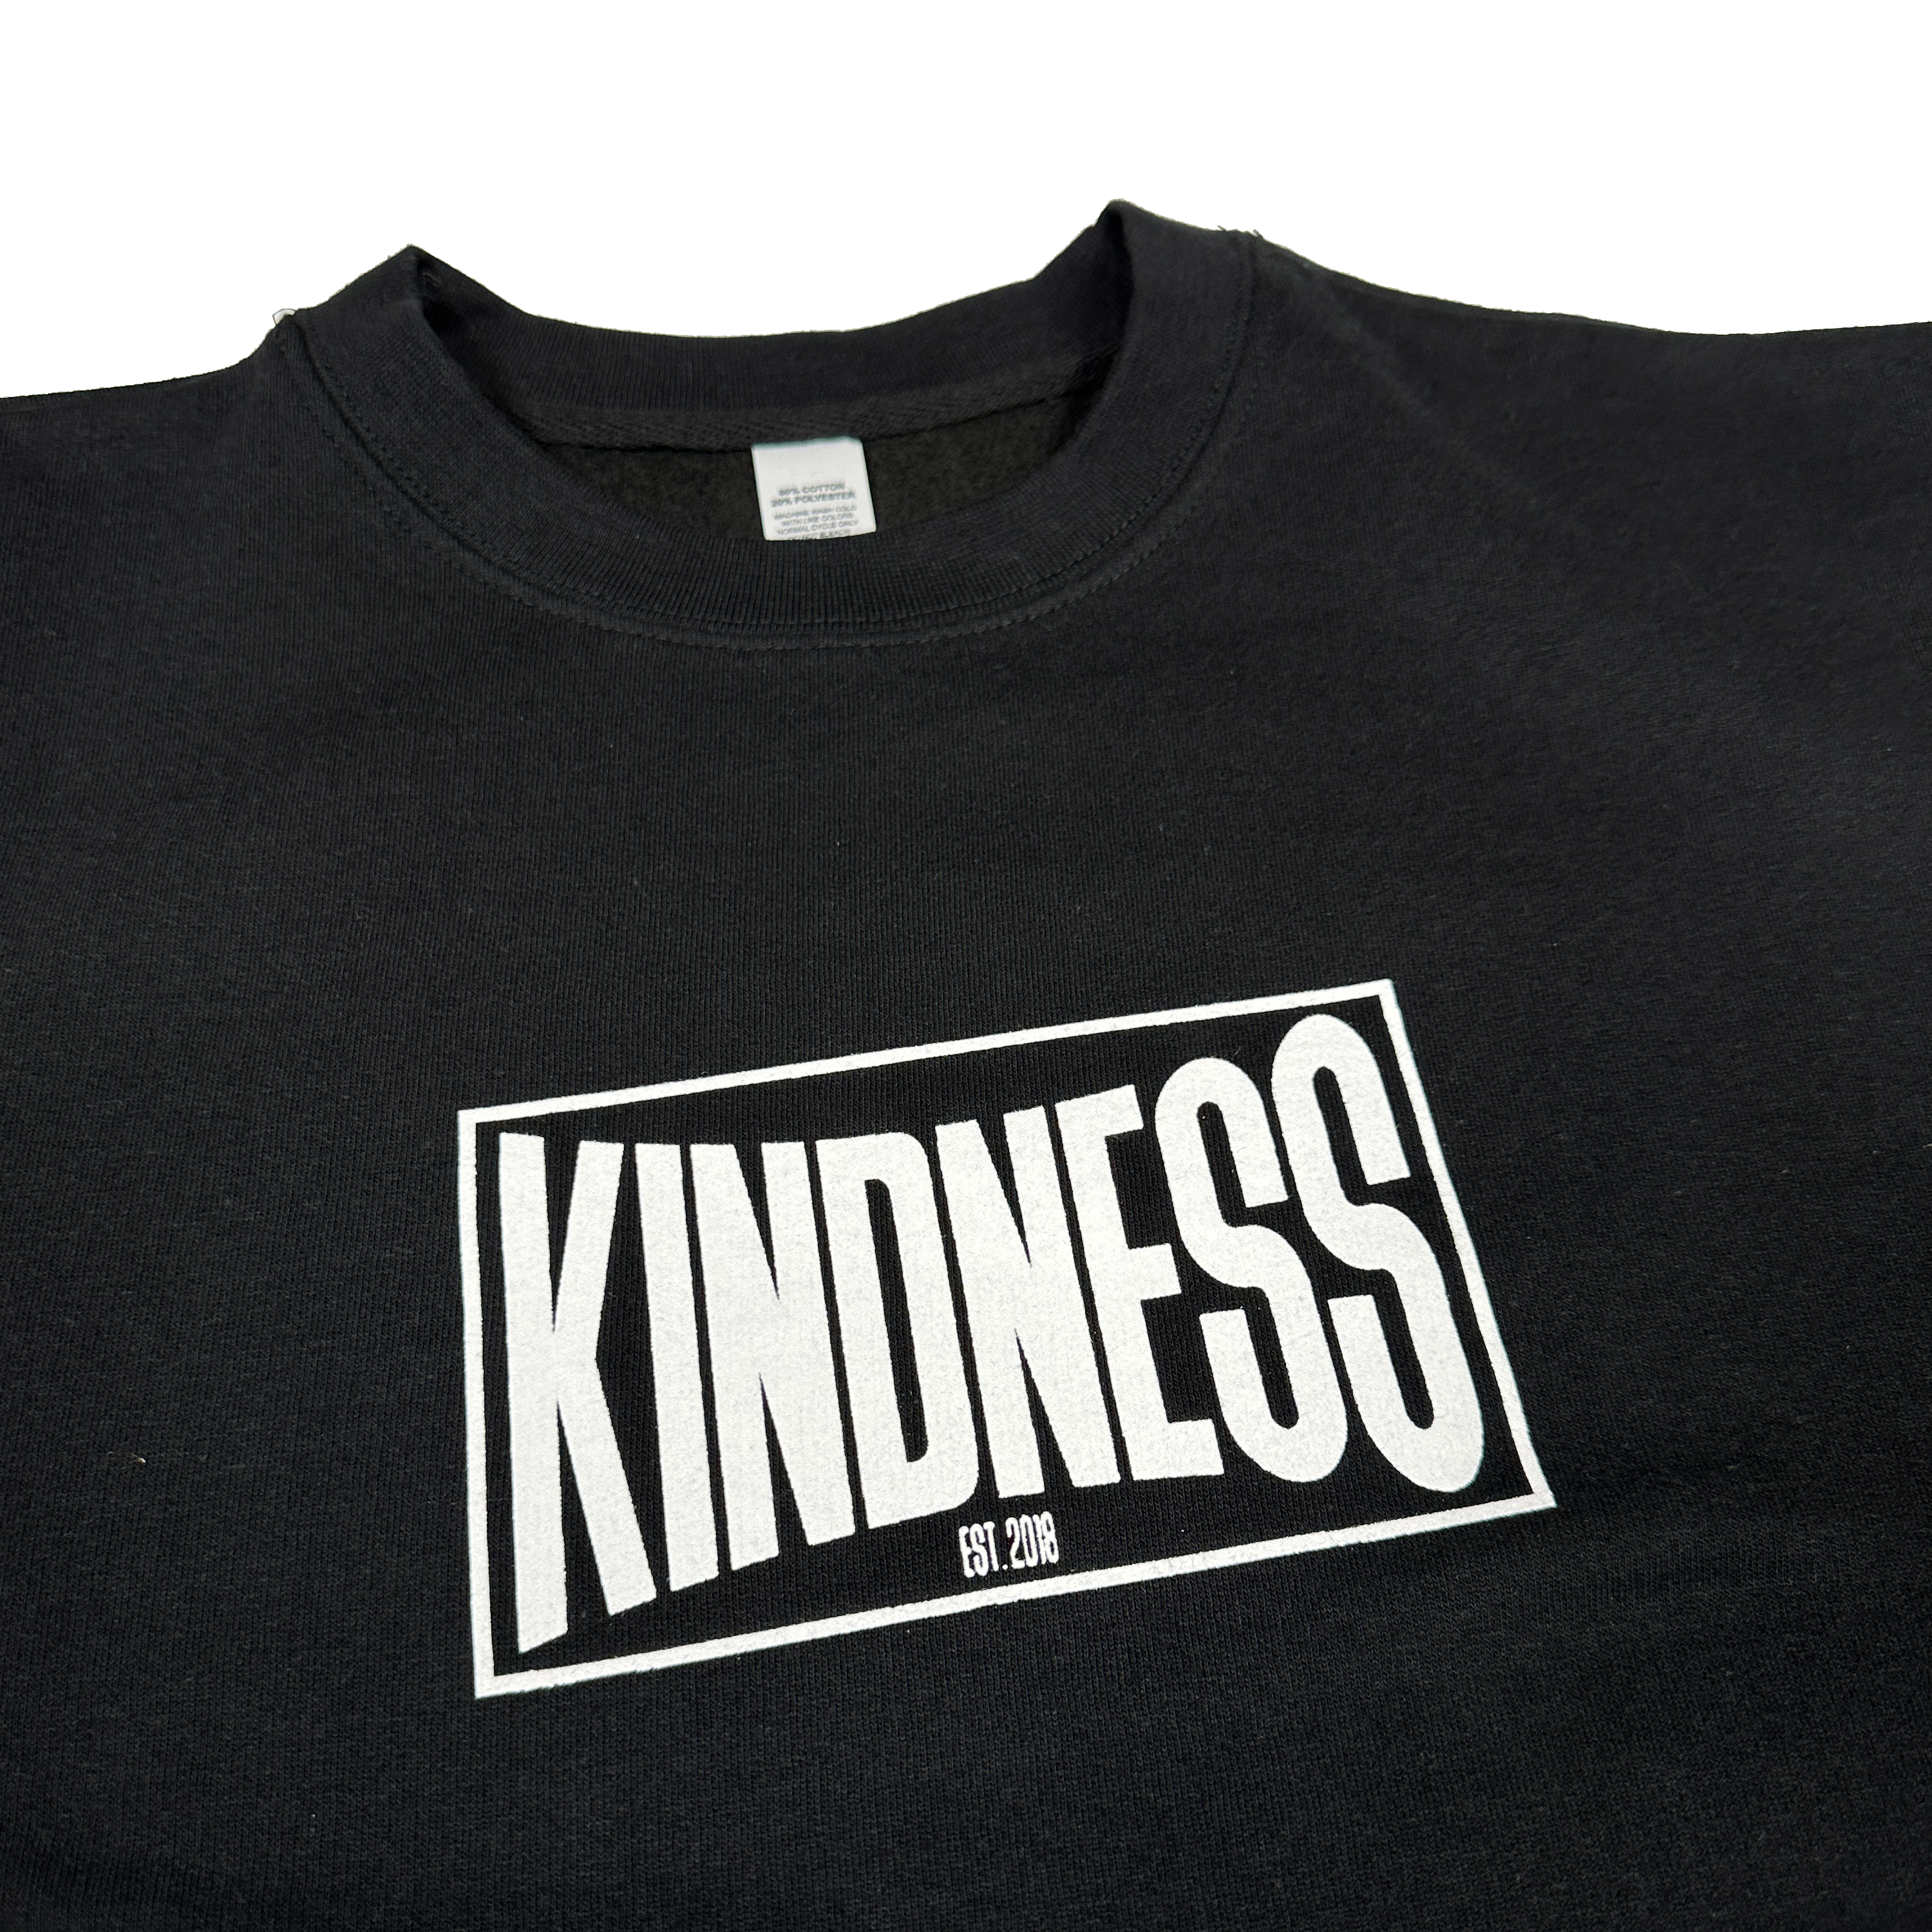 The Kindness Outlast Mid Weight Crewneck Sweatshirt